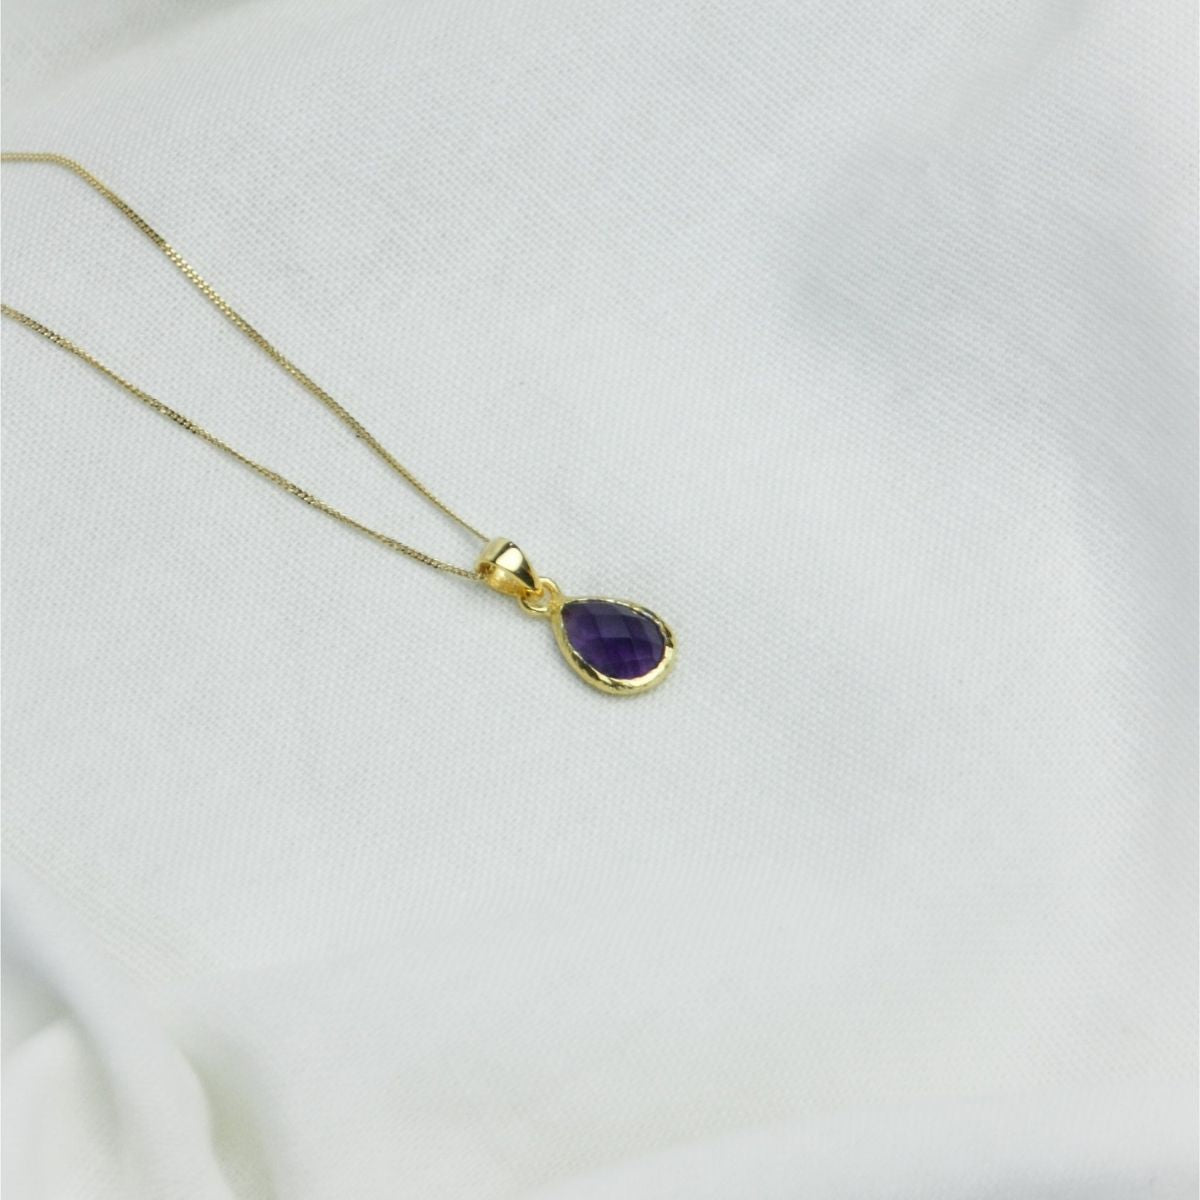 a purple pendant necklace on a white cloth